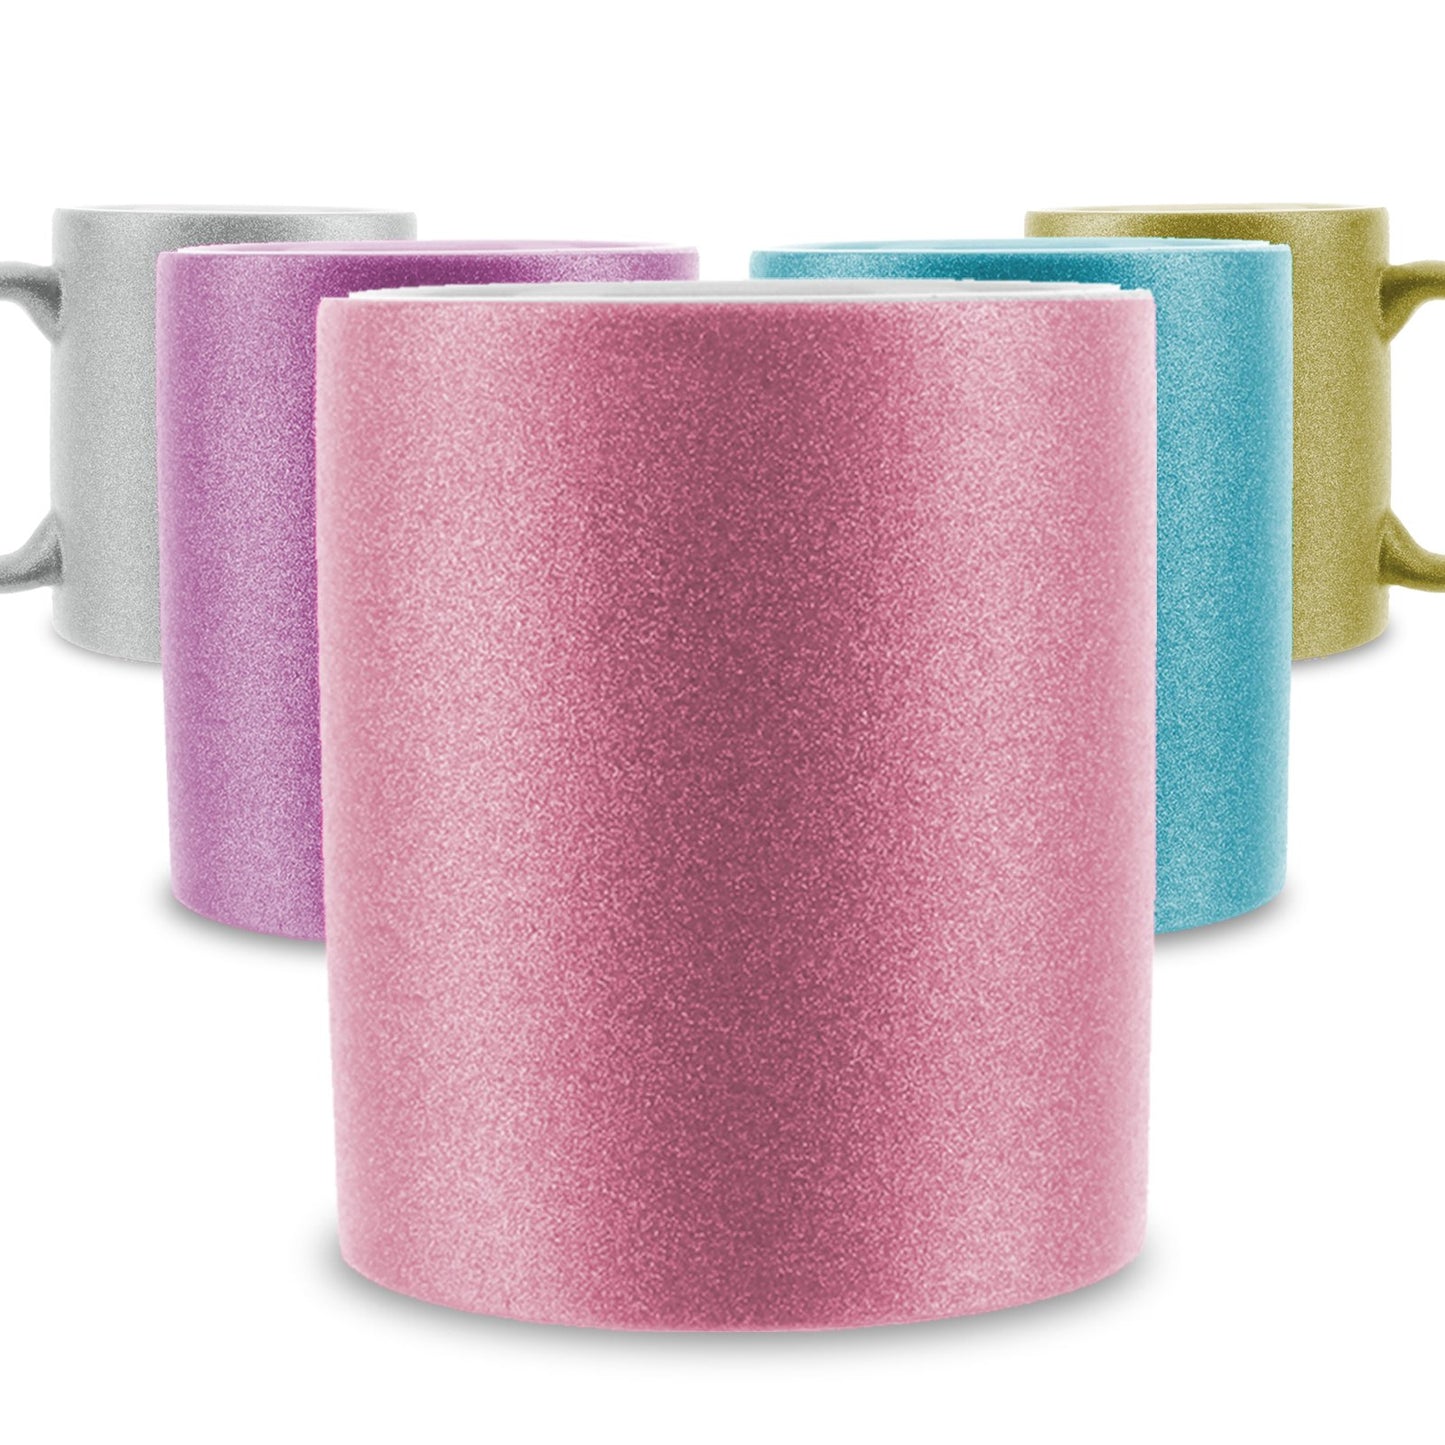 Personalised Glitter Mug with Stylish Name on Starry Nightscape